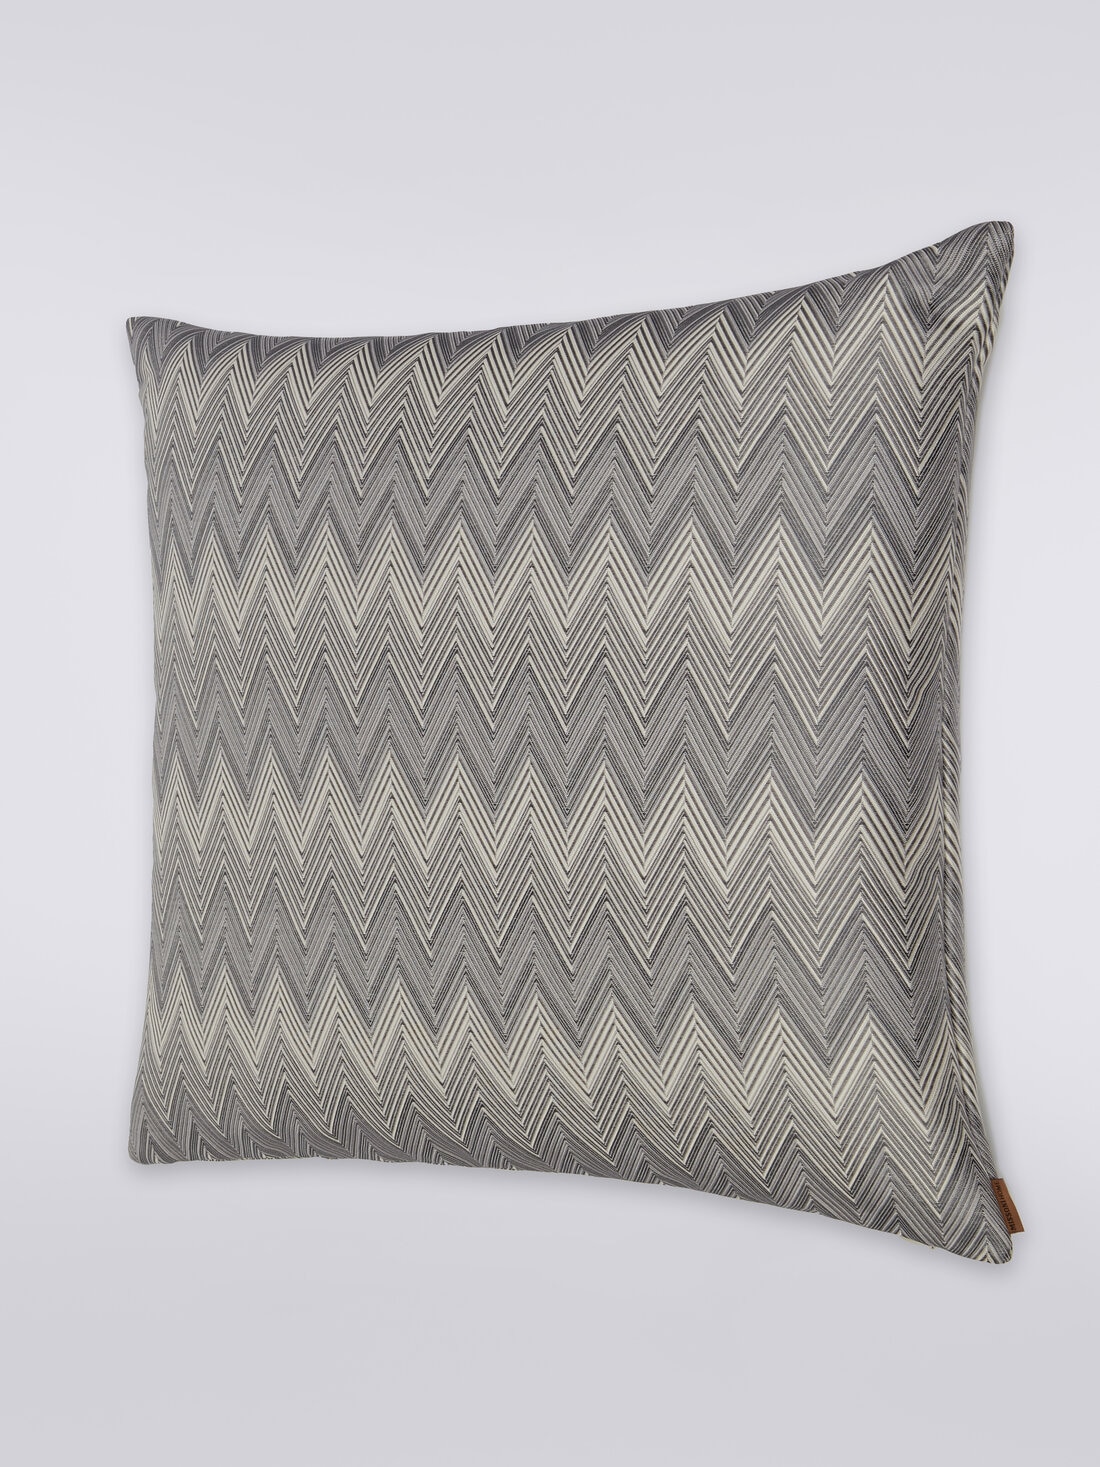 Brest cushion 50x50 cm, Multicoloured  - 8051275607434 - 1